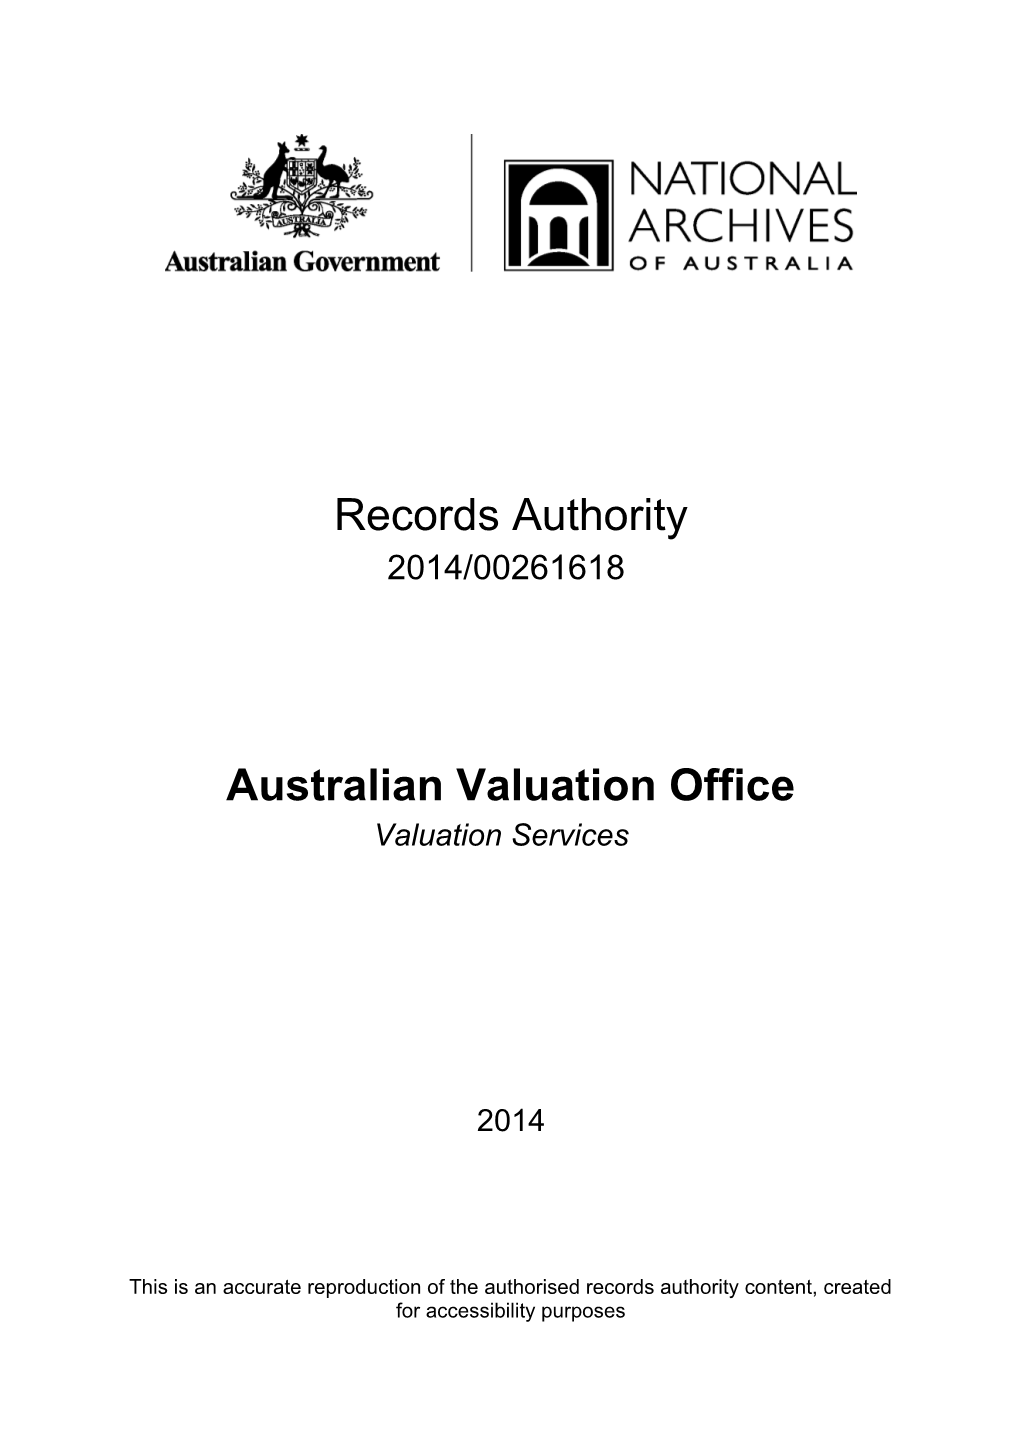 Australian Valuation Office (AVO) - Records Authority - 2014/00261618